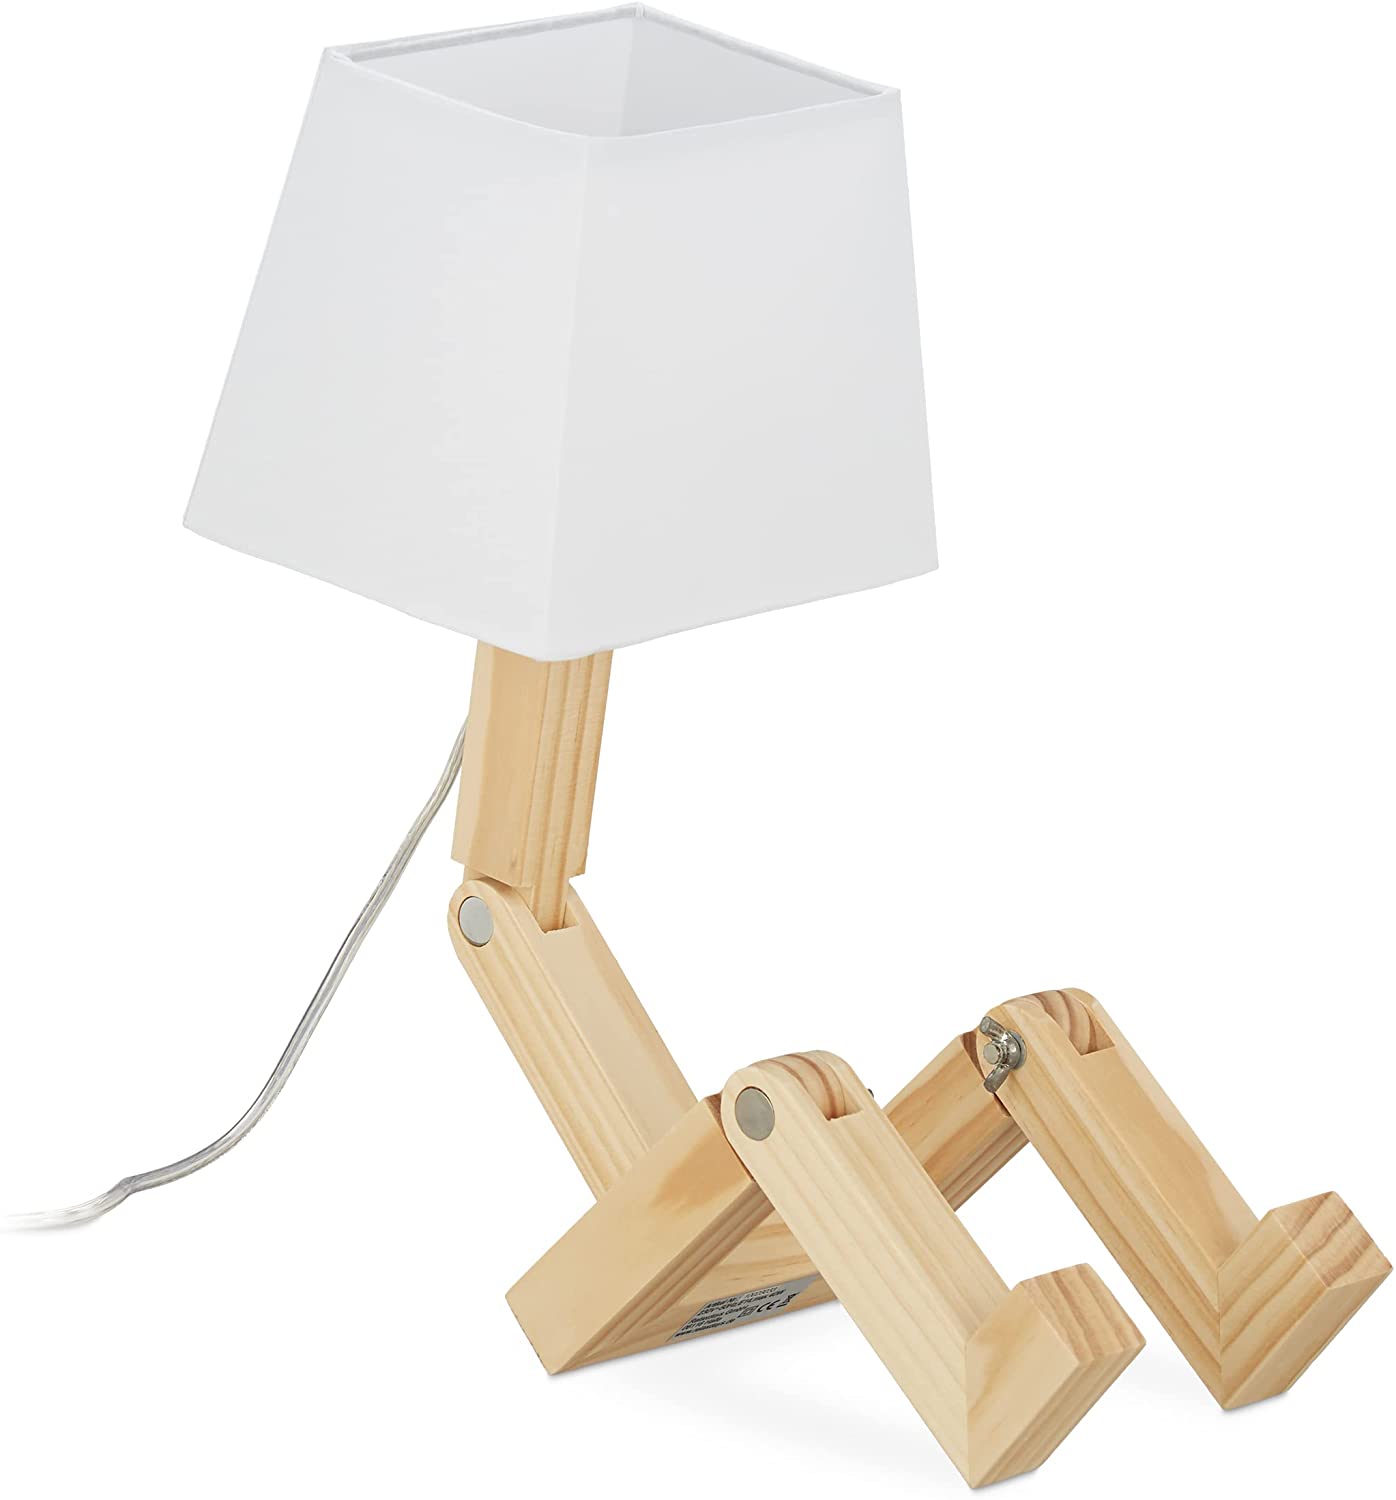 Relaxdays Robot Table Lamp, Adjustable, Lampshade, Original, Desk Lamp H x W x D: 42 x 18 x 32 cm, Natural Wood